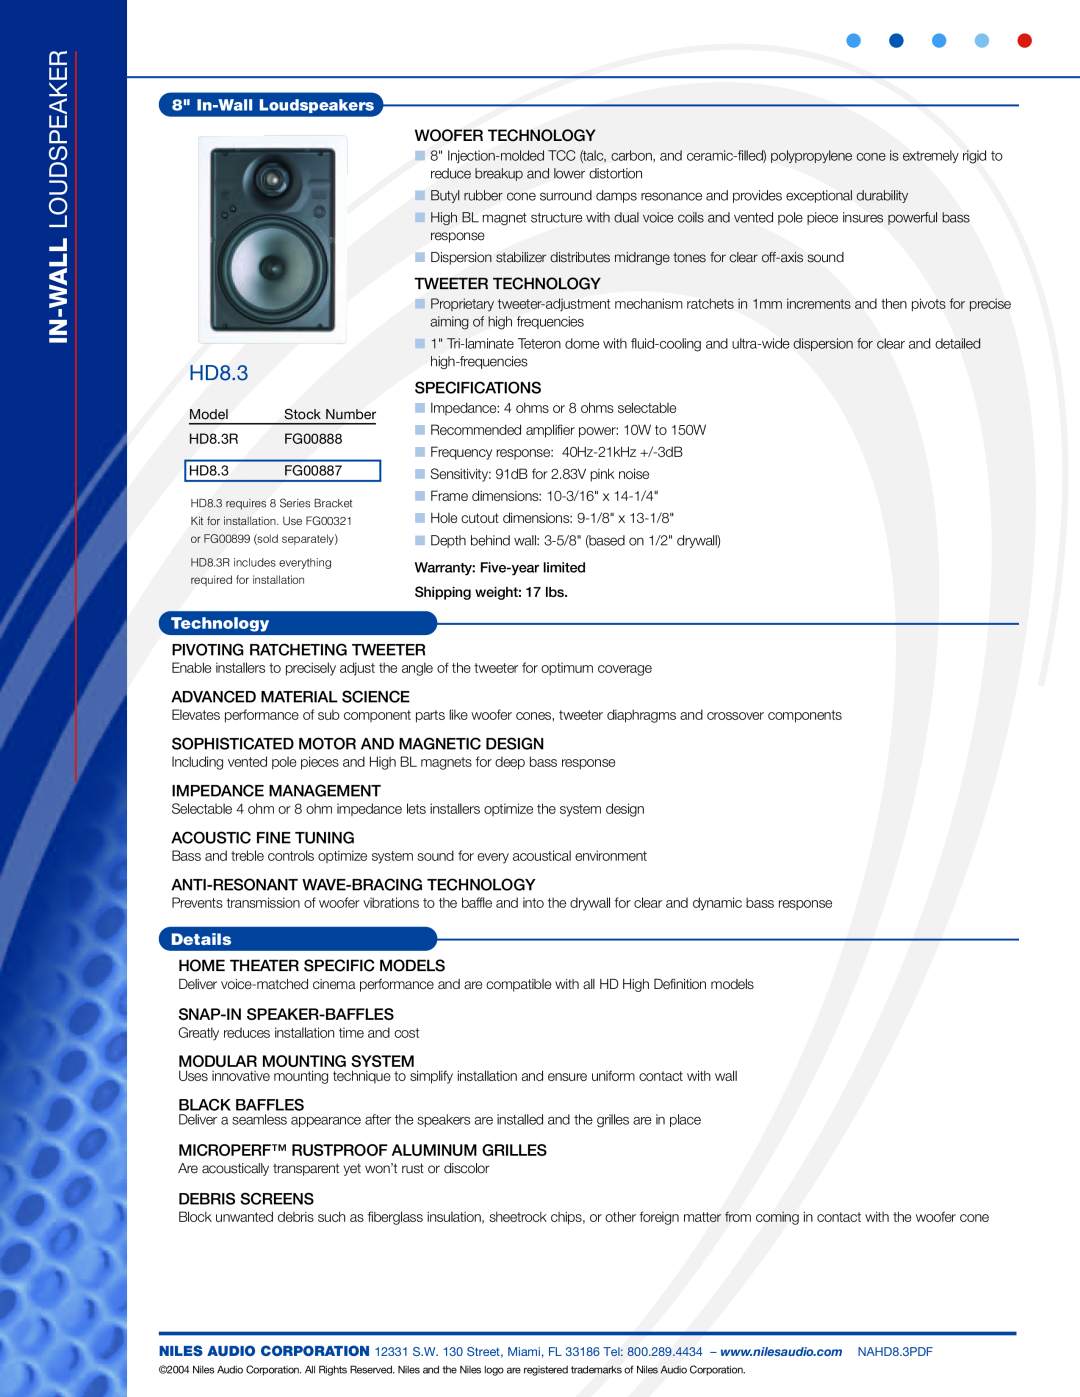 Niles Audio HD8.3 specifications In-Wall Loudspeaker, In-WallLoudspeakers, Technology, Details 